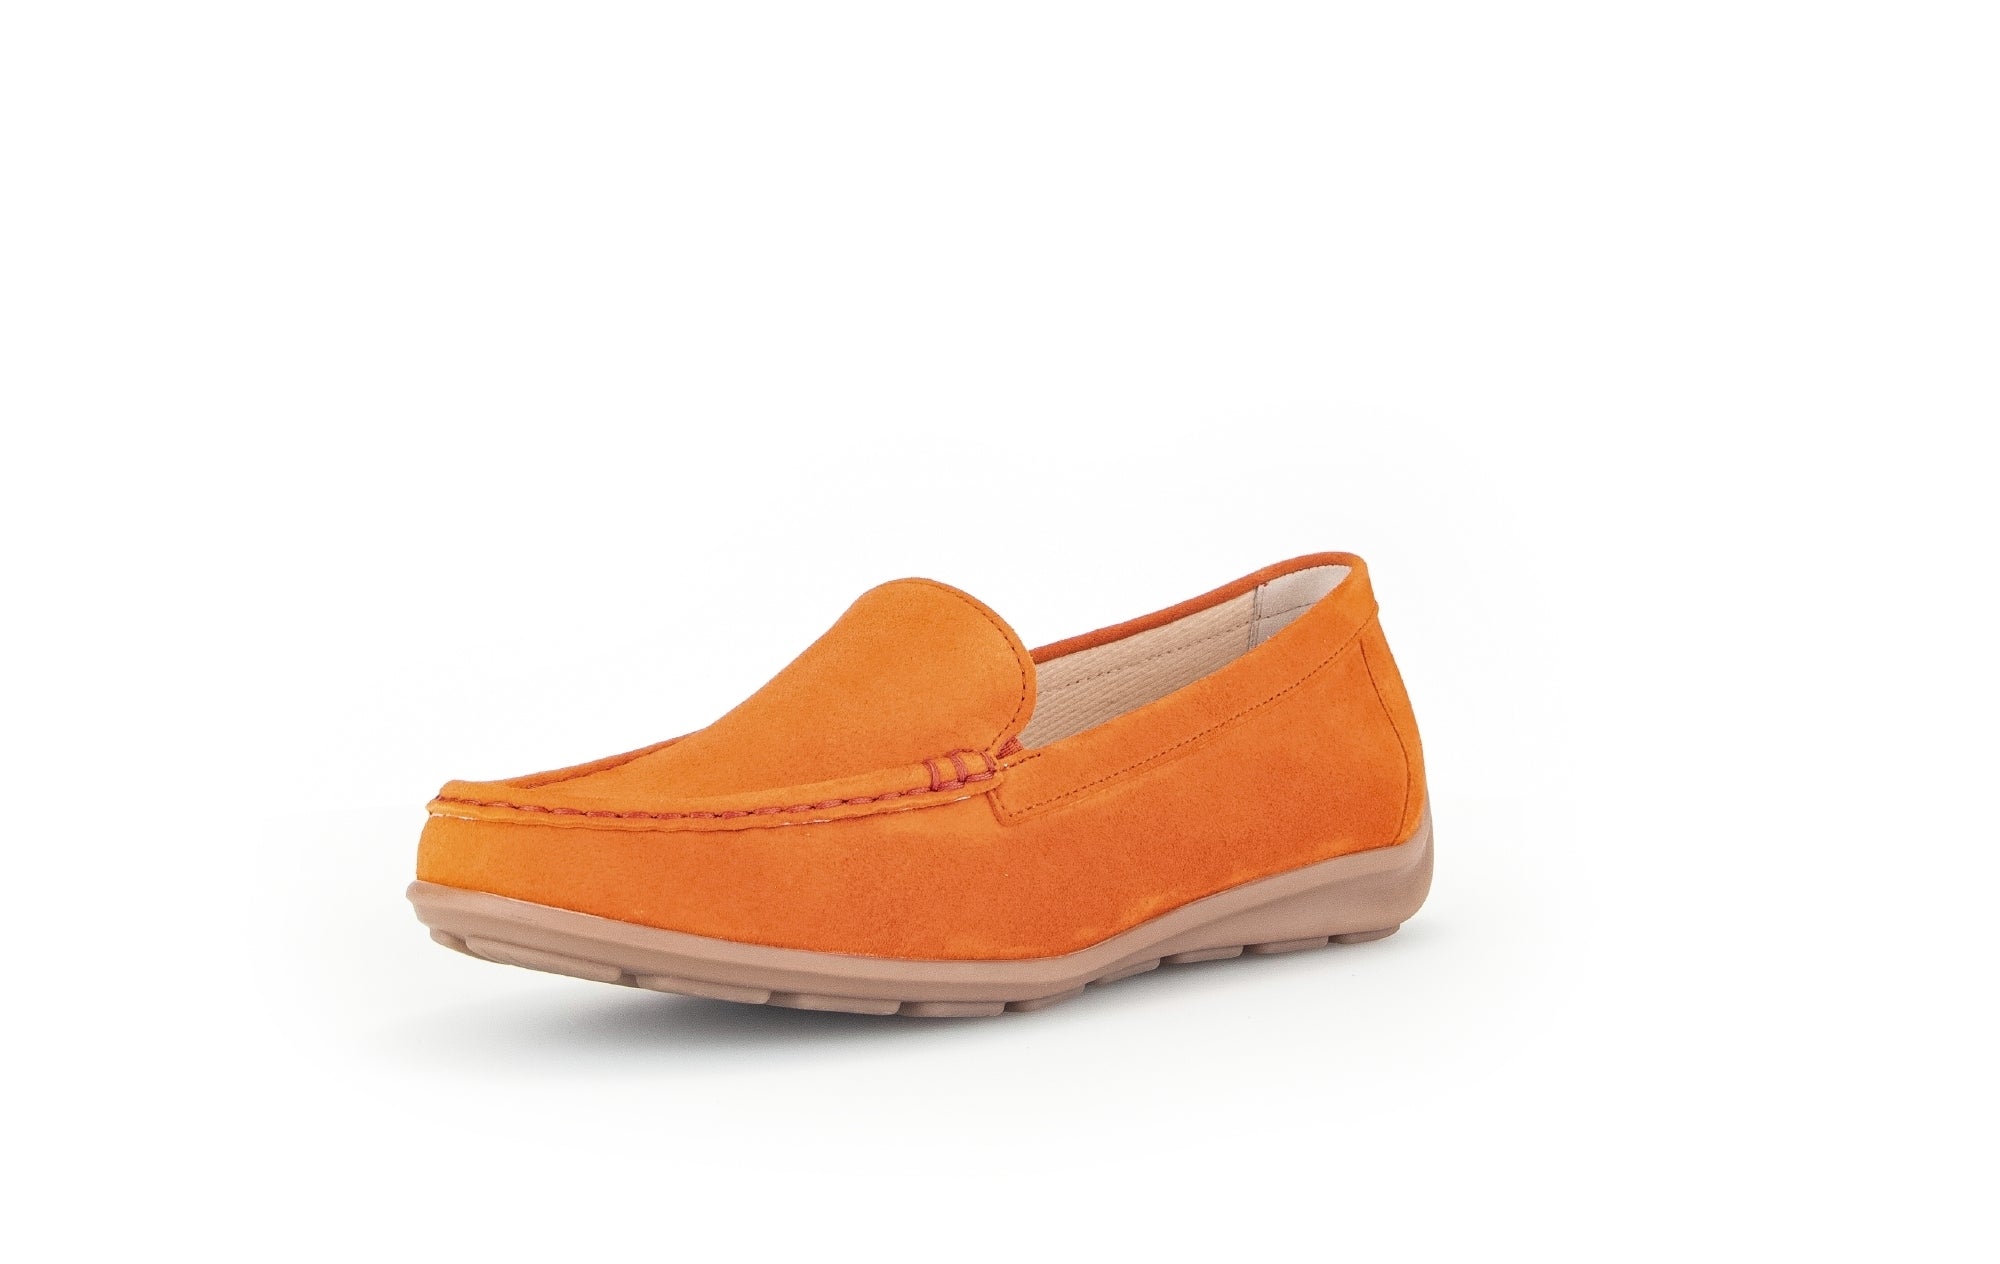 '42.440.32' women's loafer - Orange - Chaplinshoes'42.440.32' women's loafer - OrangeGabor